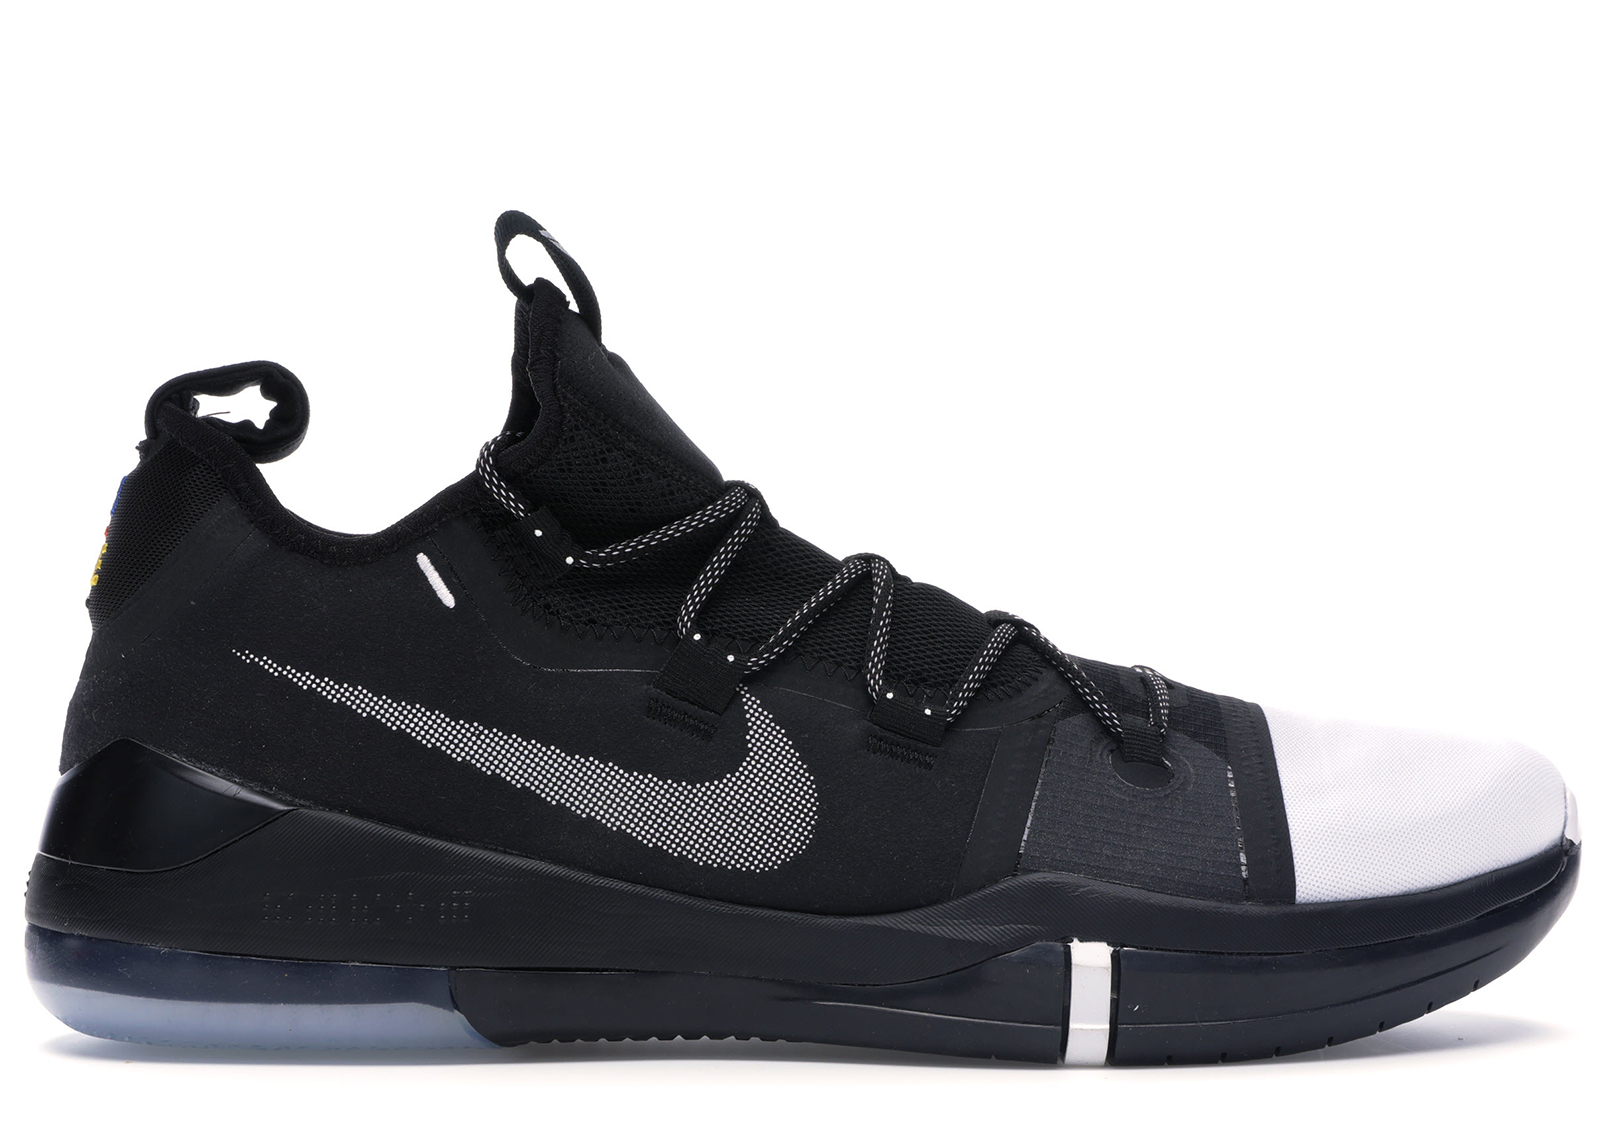 Nike Kobe AD Black Toe - AR5515-002